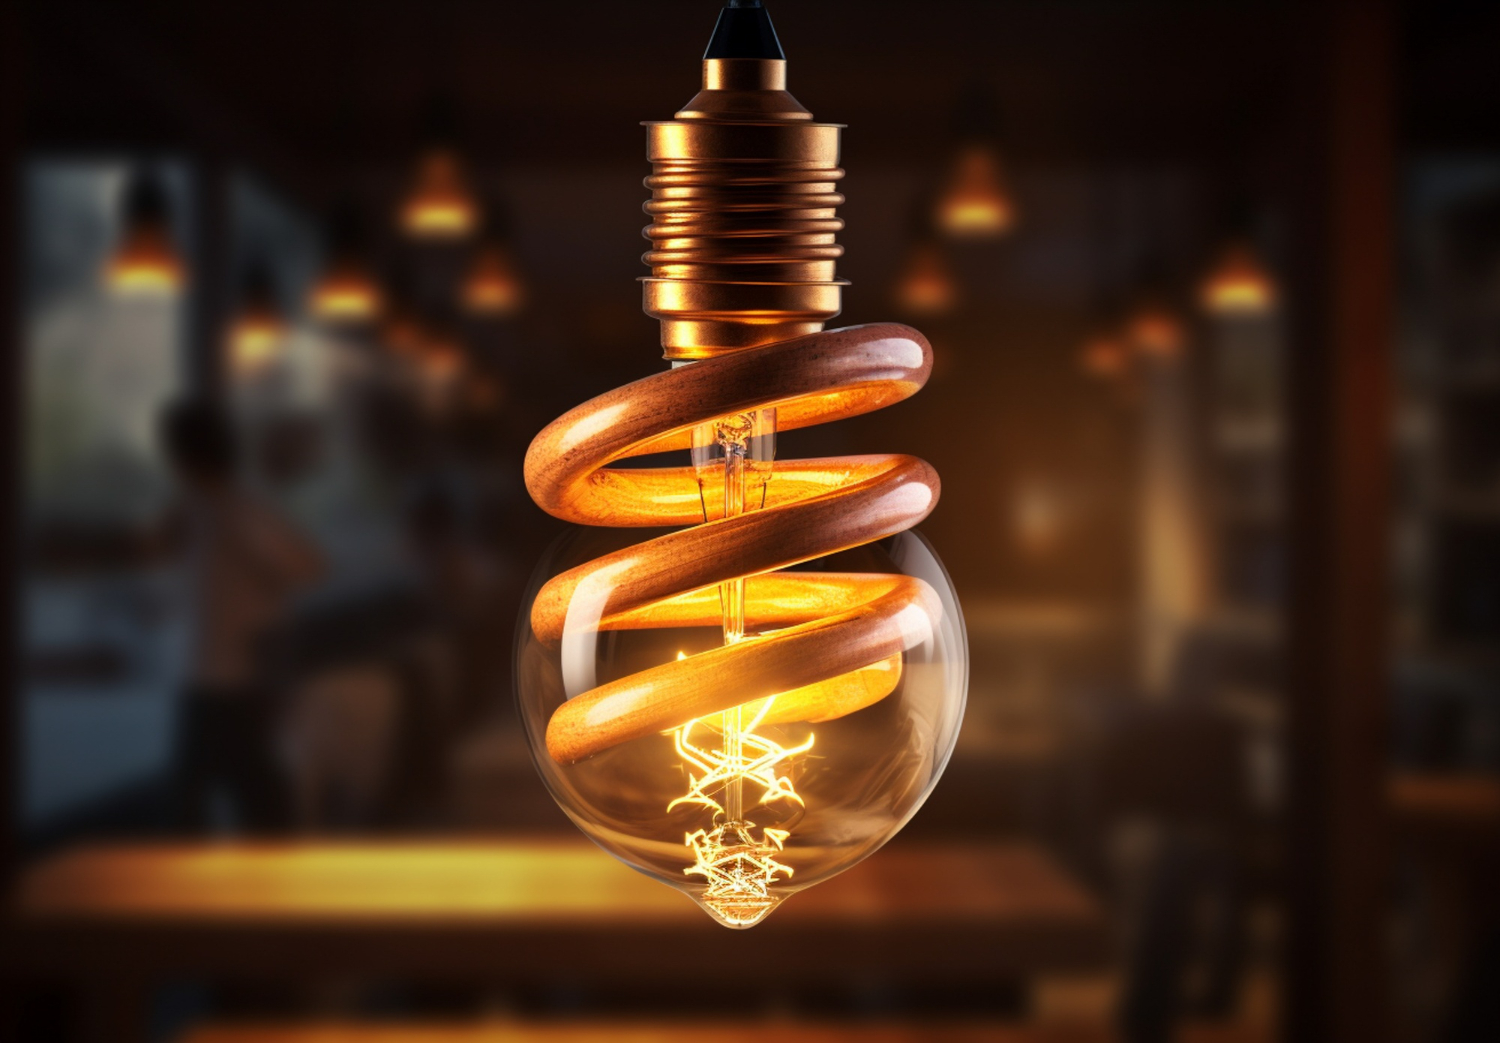 3D Modern Lighting Lamp Design | Image by Freepik